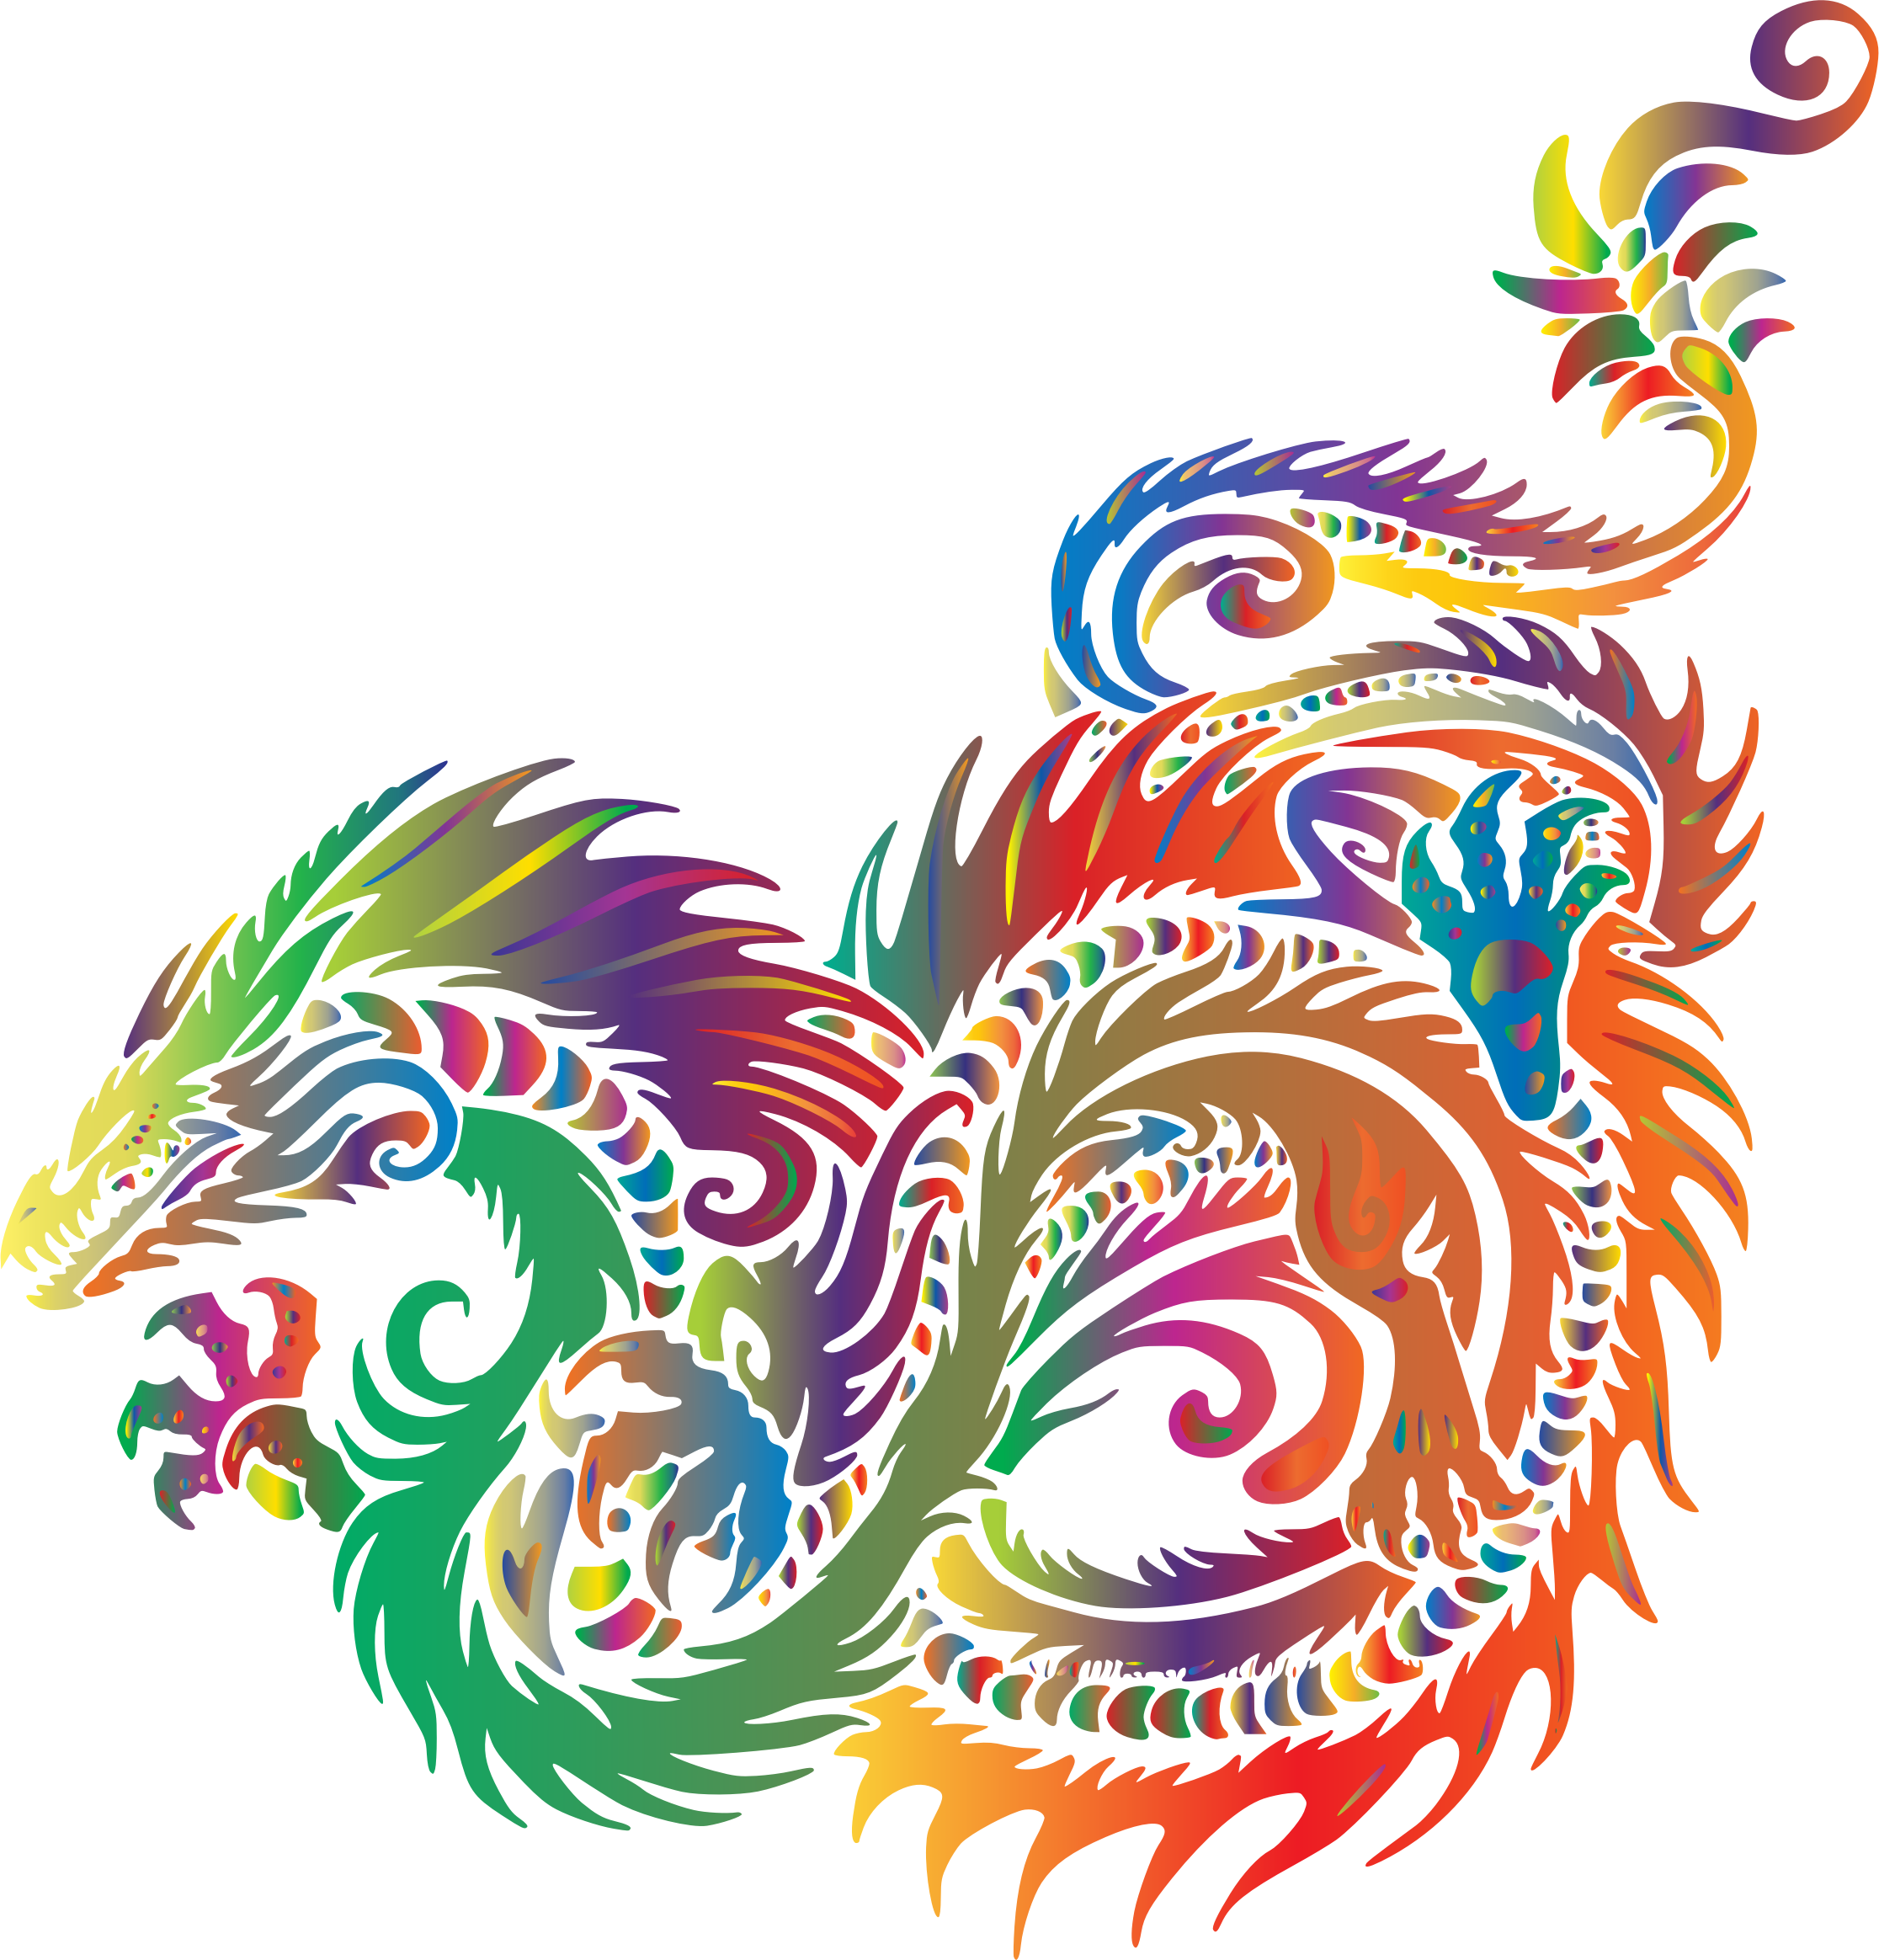 Dragon graphics. Китайский дракон. Дракон орнамент. Векторная Графика дракон. Векторное изображение дракона.